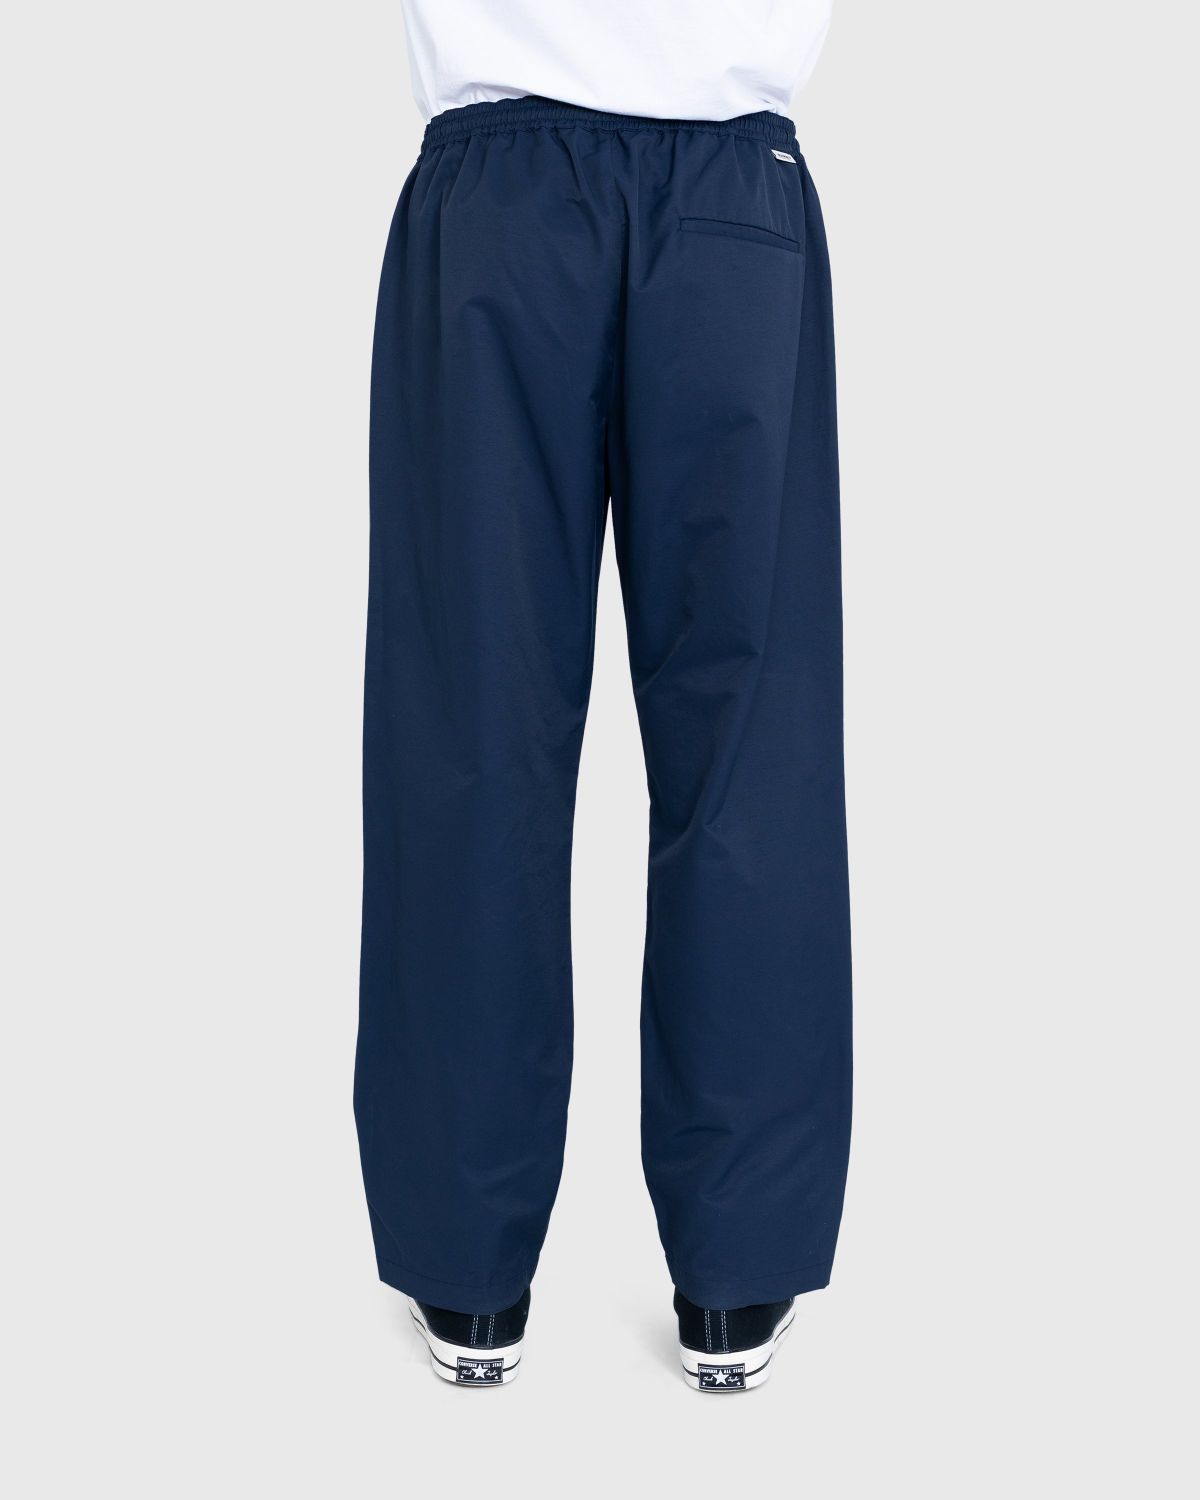 Highsnobiety – Cotton Nylon Elastic Pants Navy - Trousers - Blue - Image 4